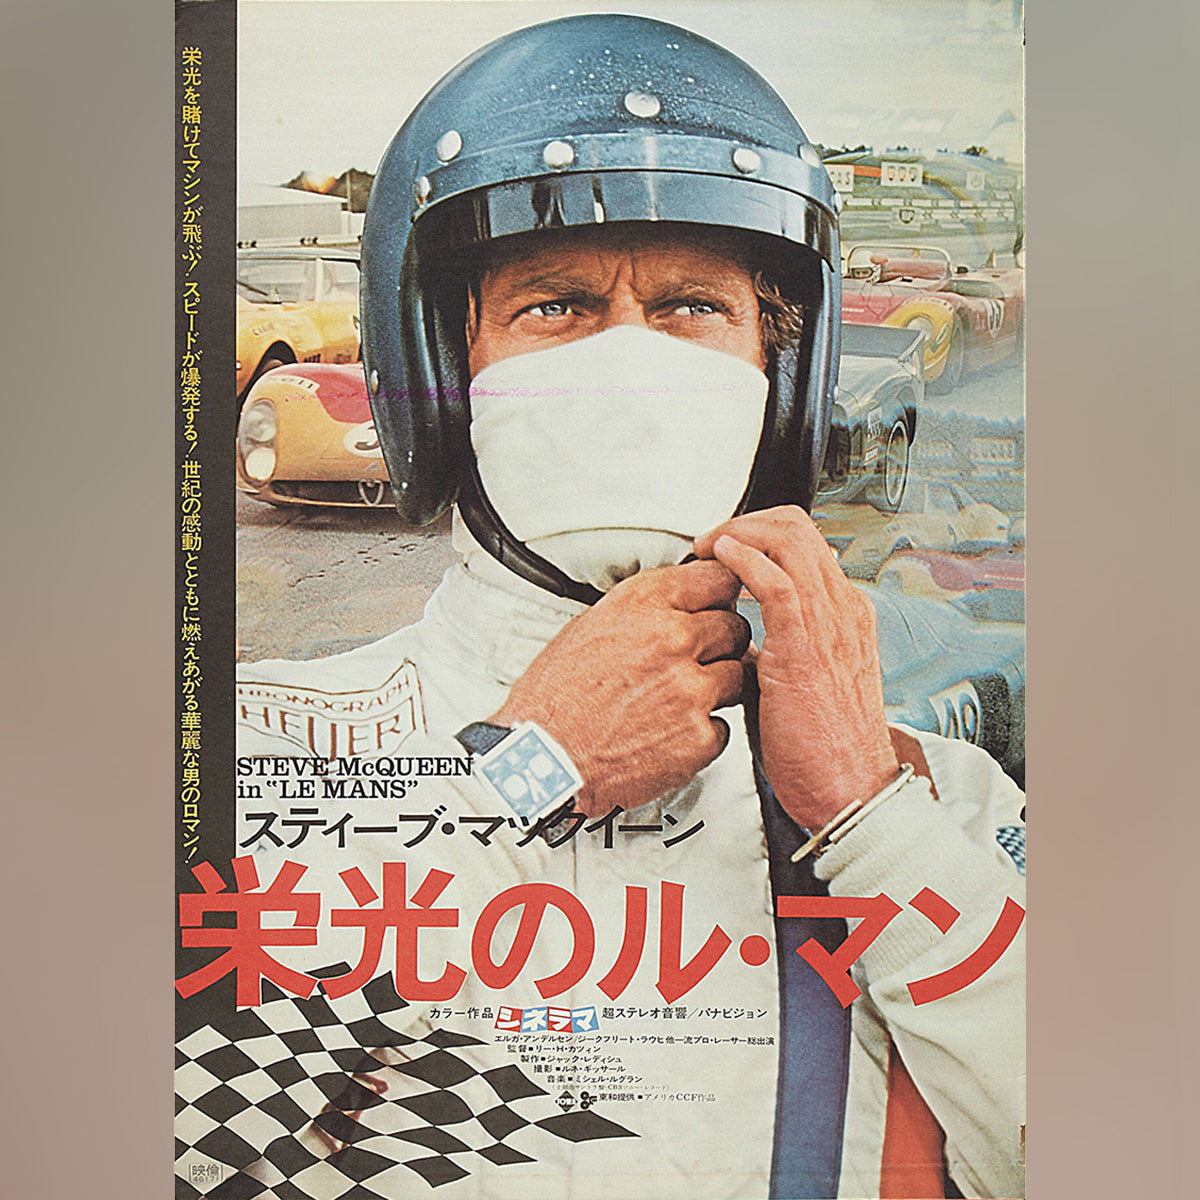 Original Movie Poster of Le Mans (1971)